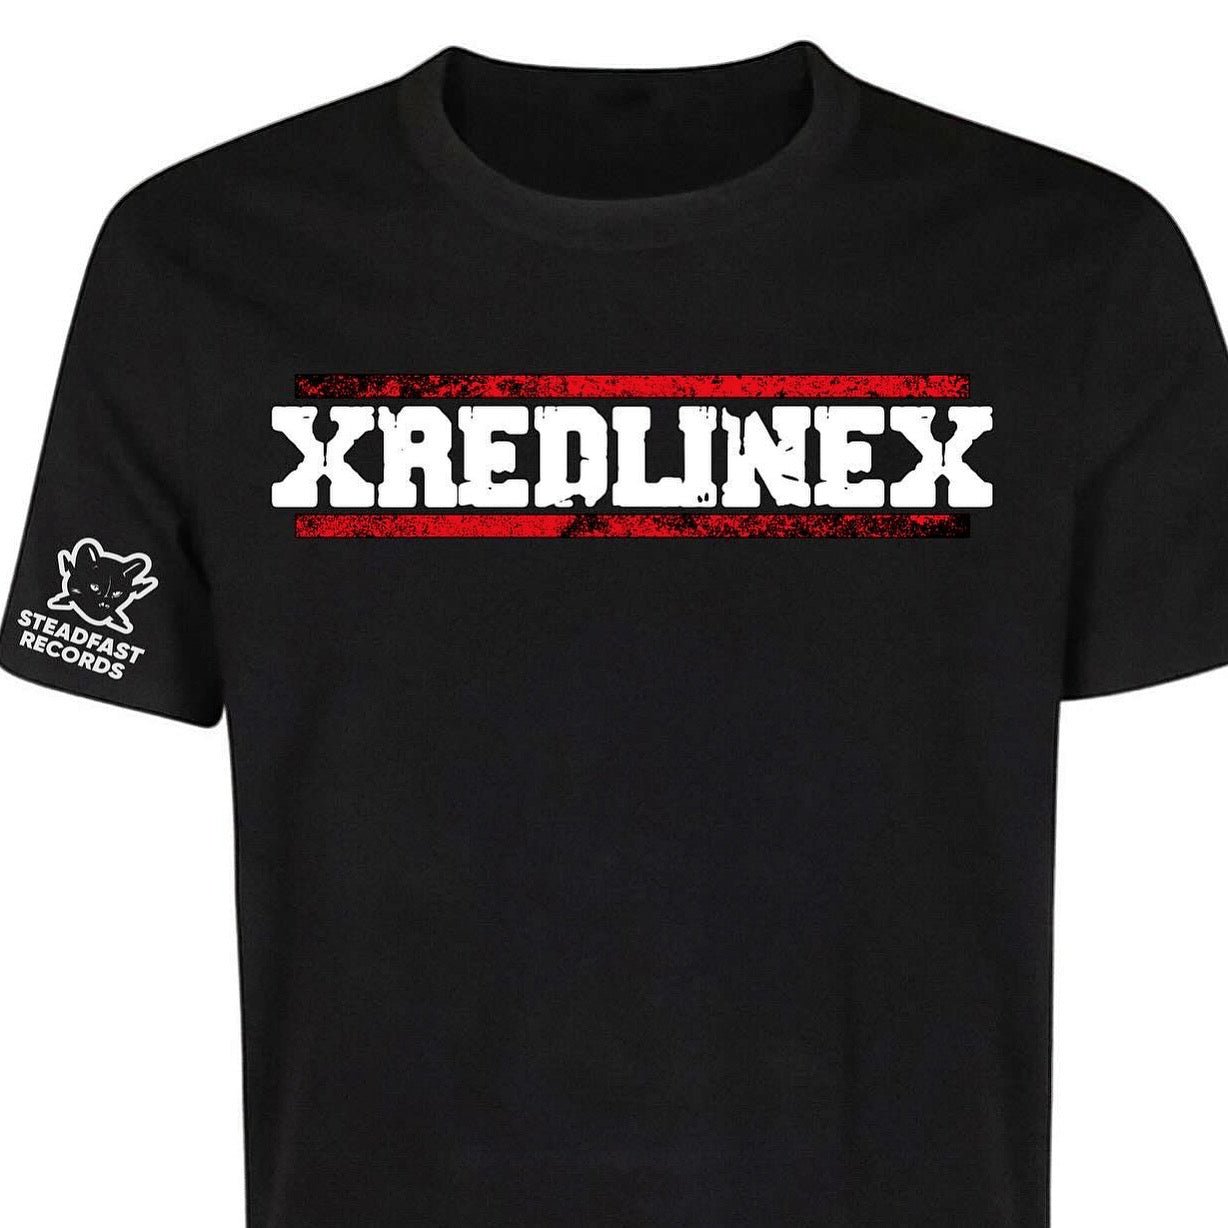 xREDLINEx - T-Shirt - Steadfast Records